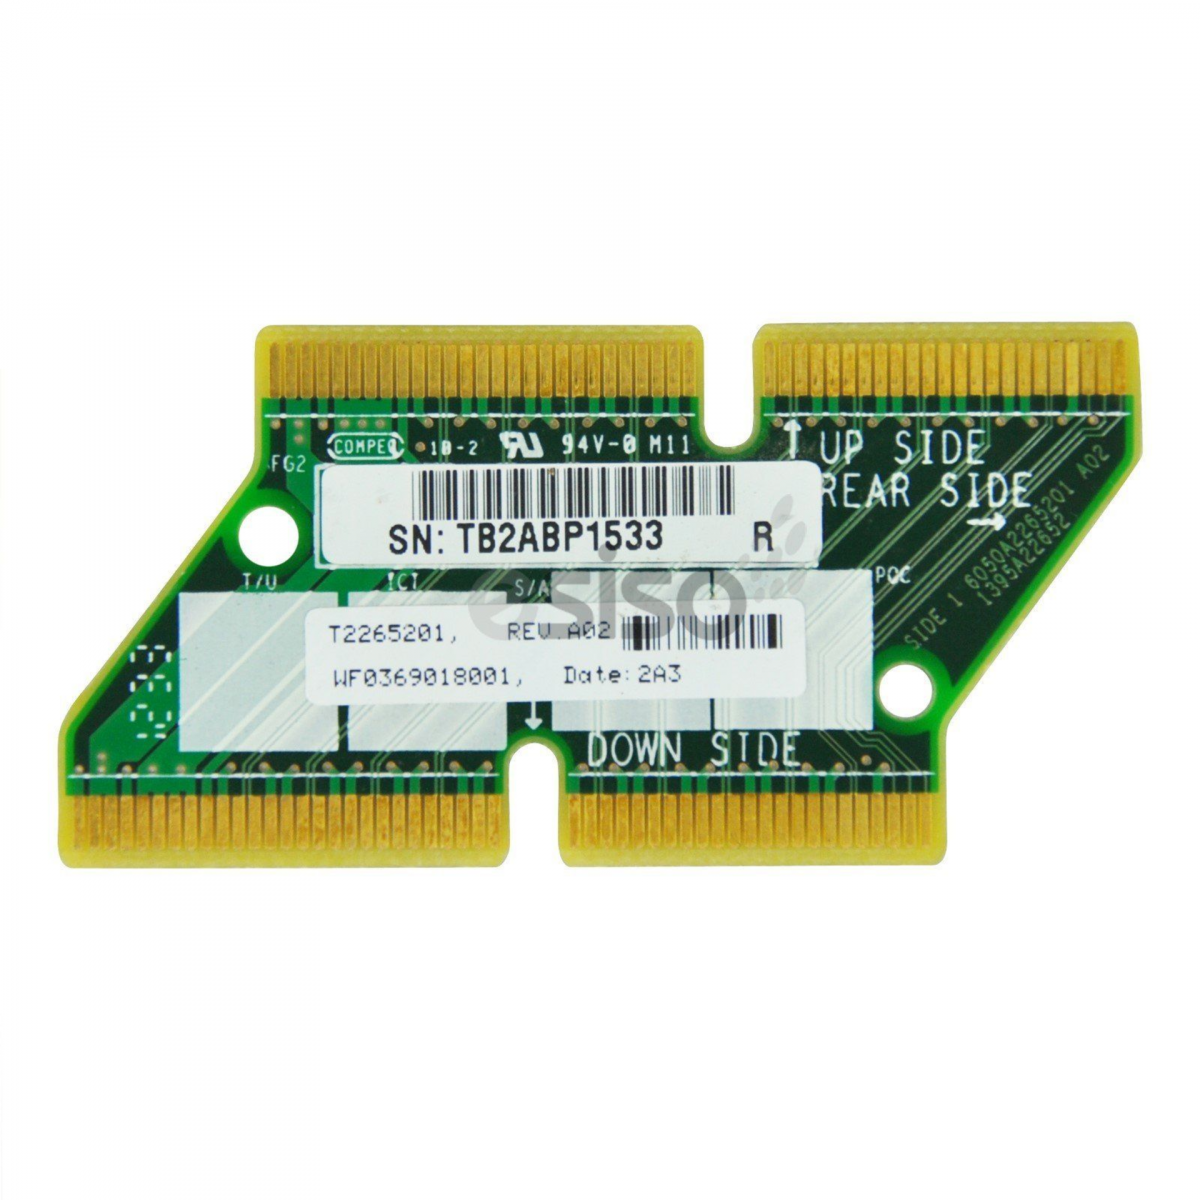 Dell C6100 Mezzanine bridge board for SAS or Infiniband cards - model JKM5M